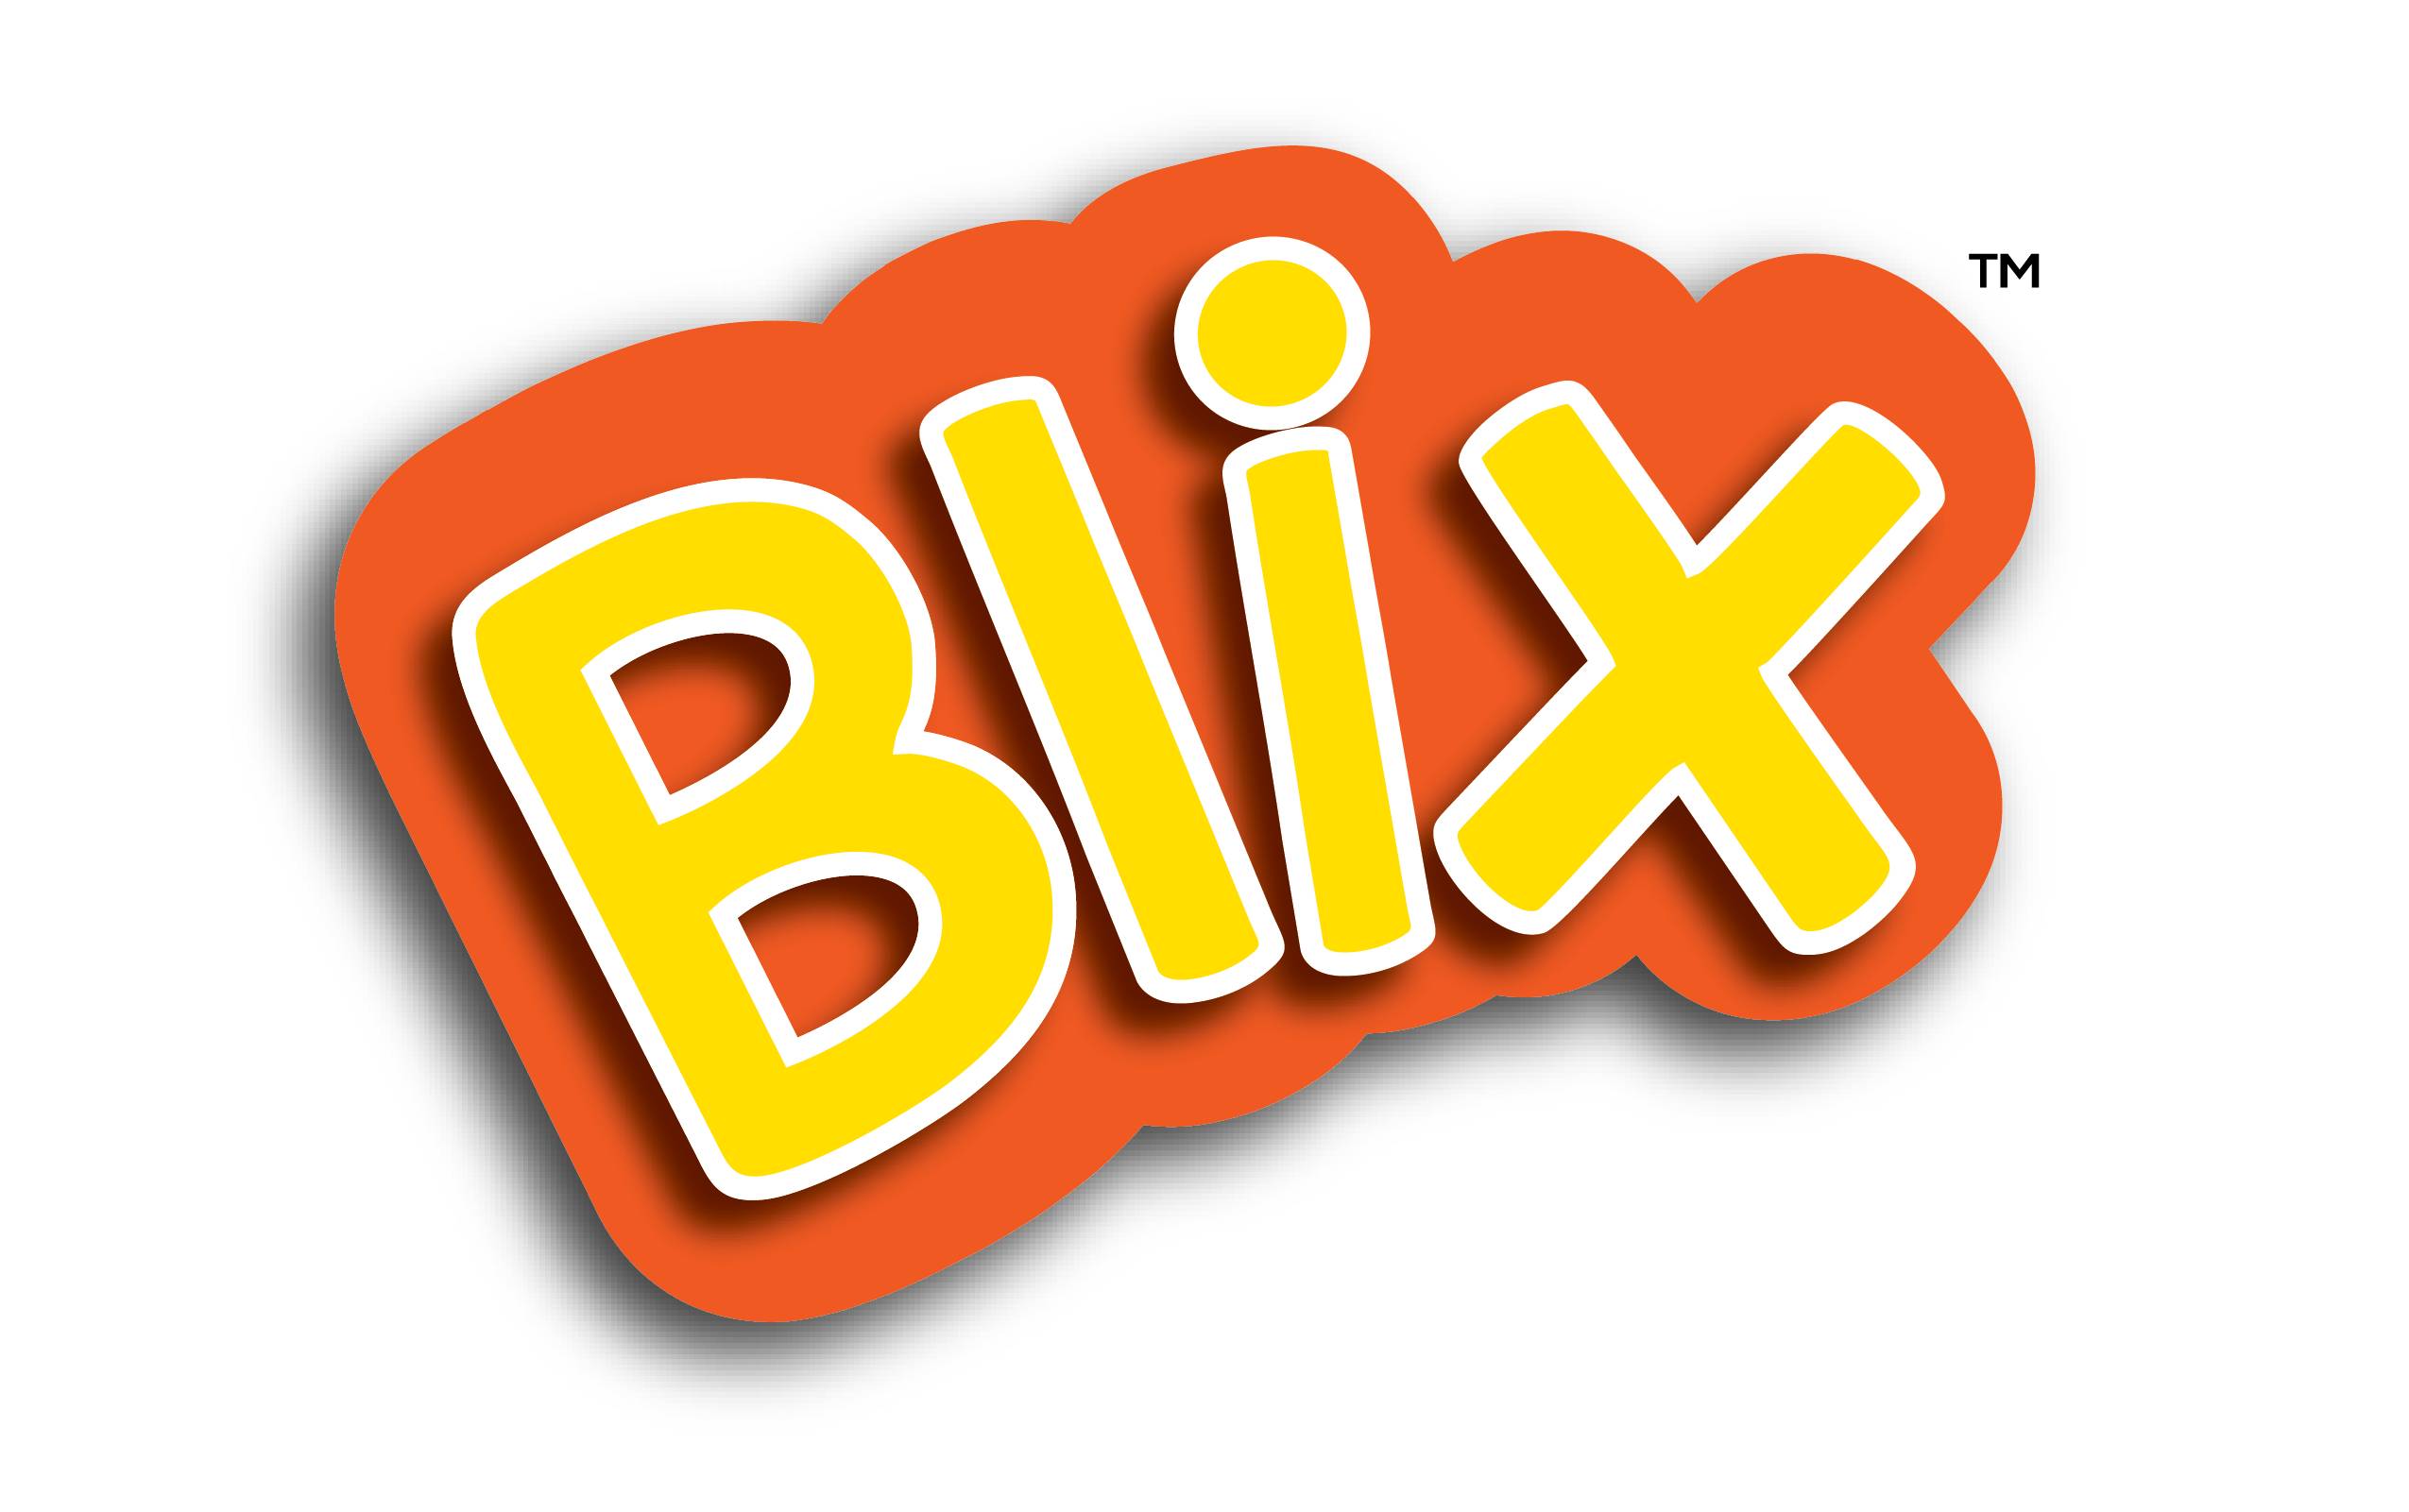 Blix Education PVT LTD